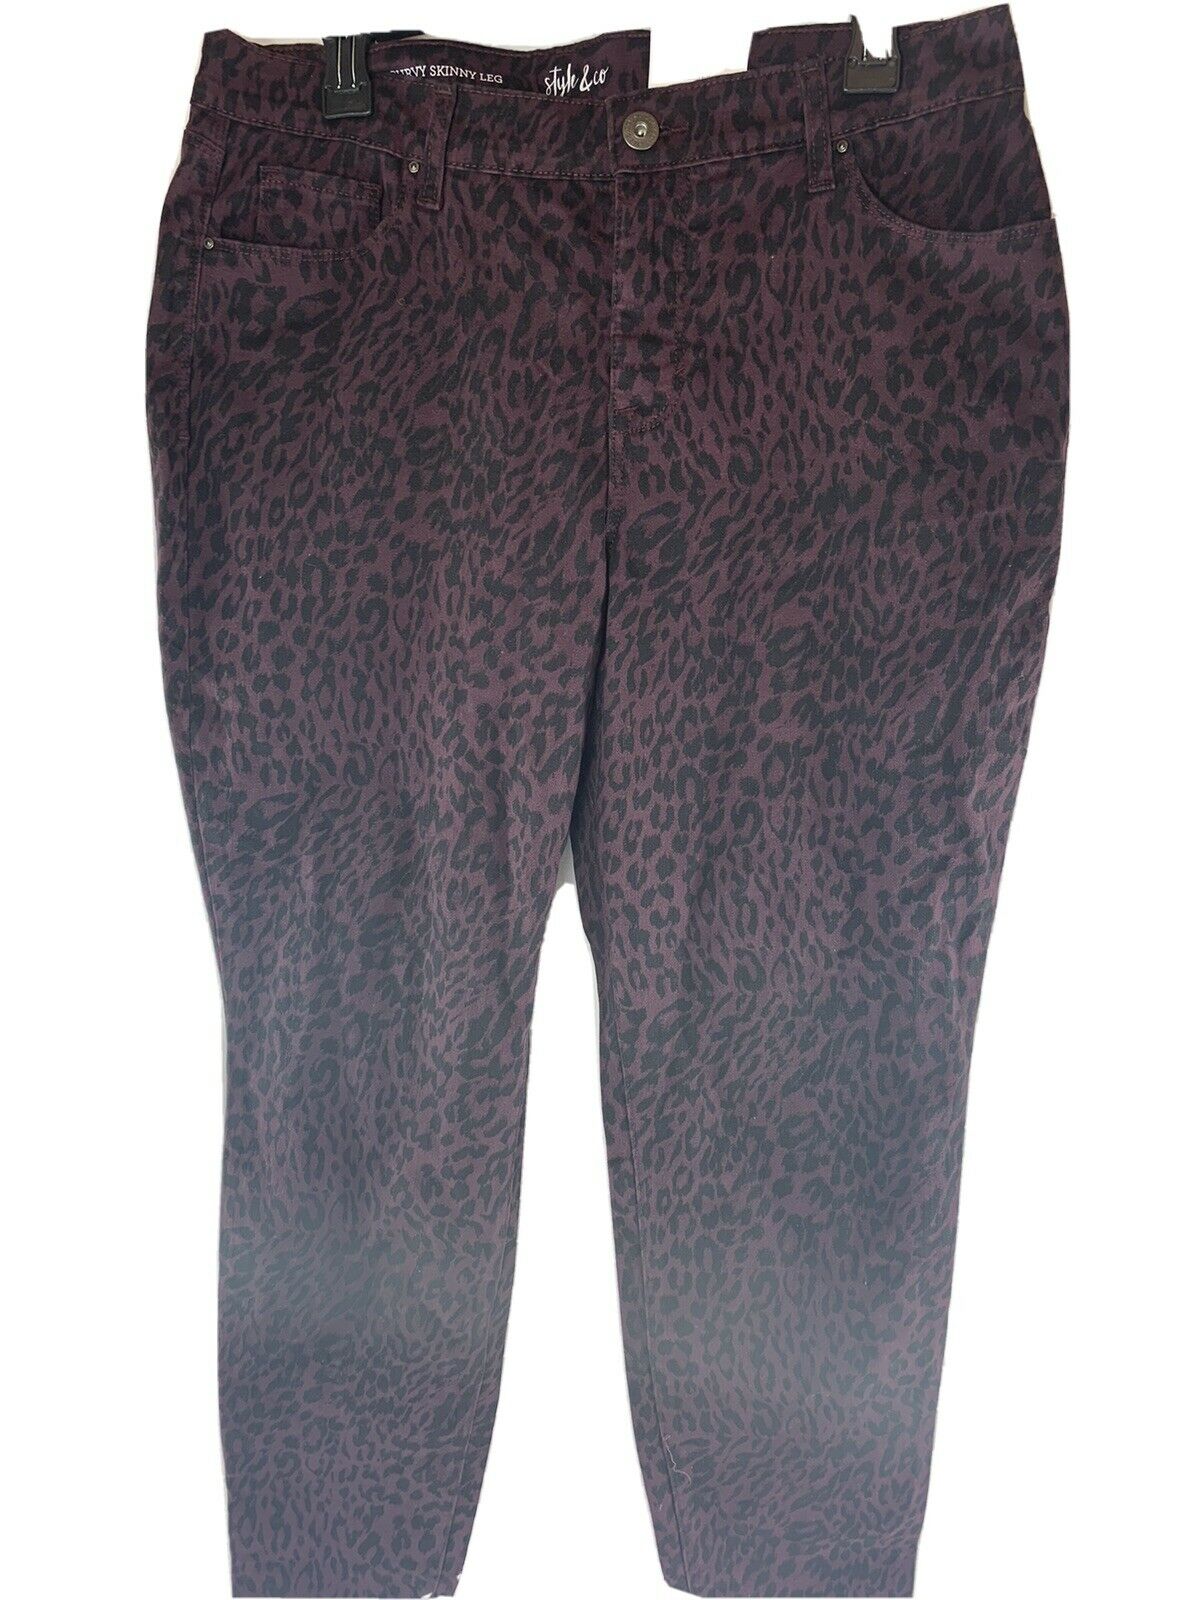 Style & Co Curvy Skinny Leg BJ Wild Puma Jeans Size 12 ($49)